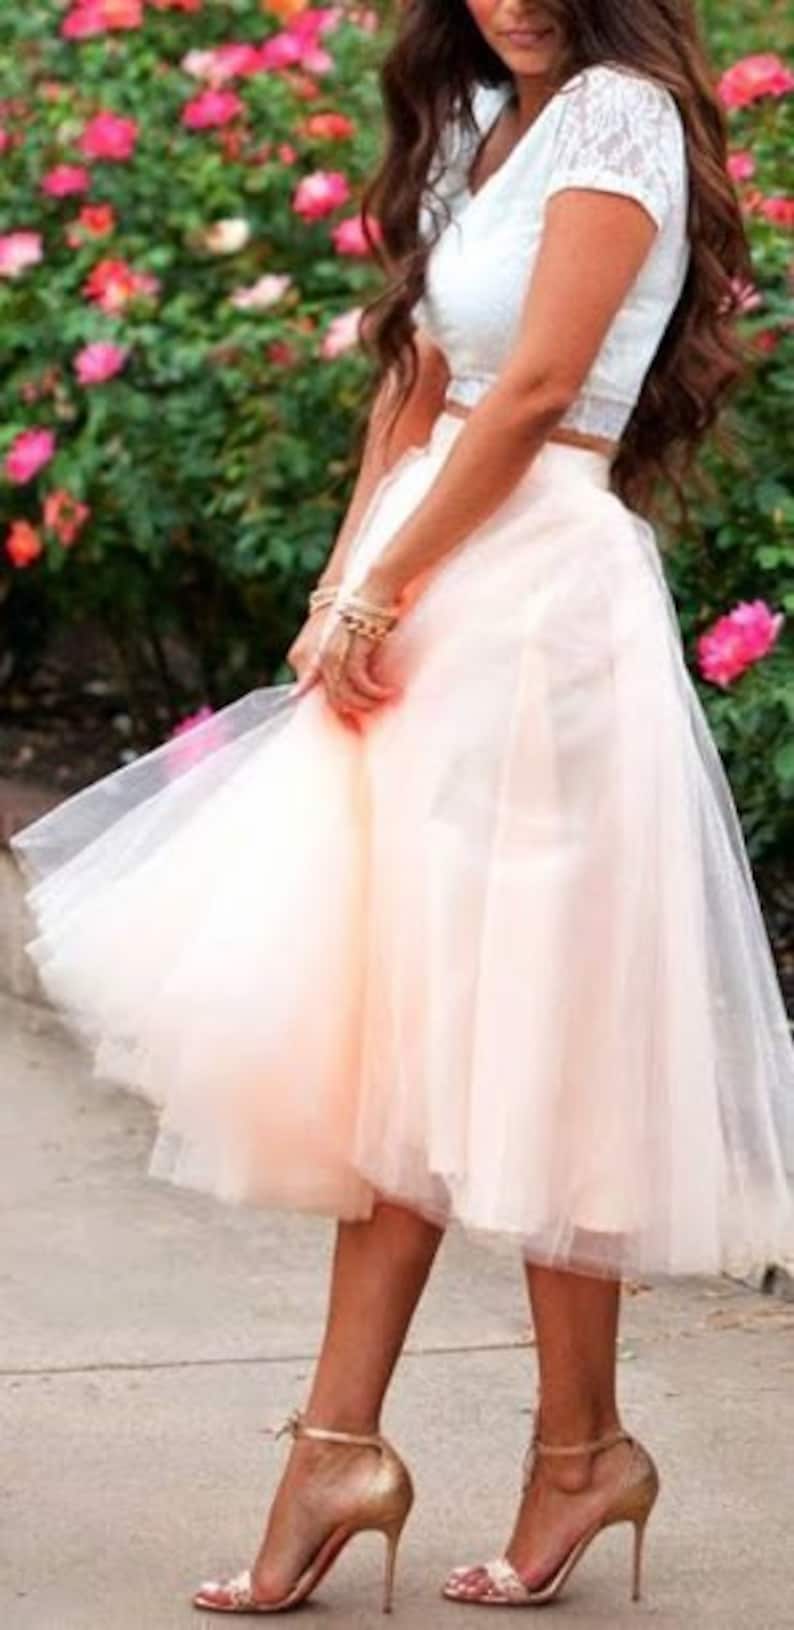 Tea Length Blush Tulle Skirt/ Party Skirt/wedding Skirt/ Bridesmaid ...